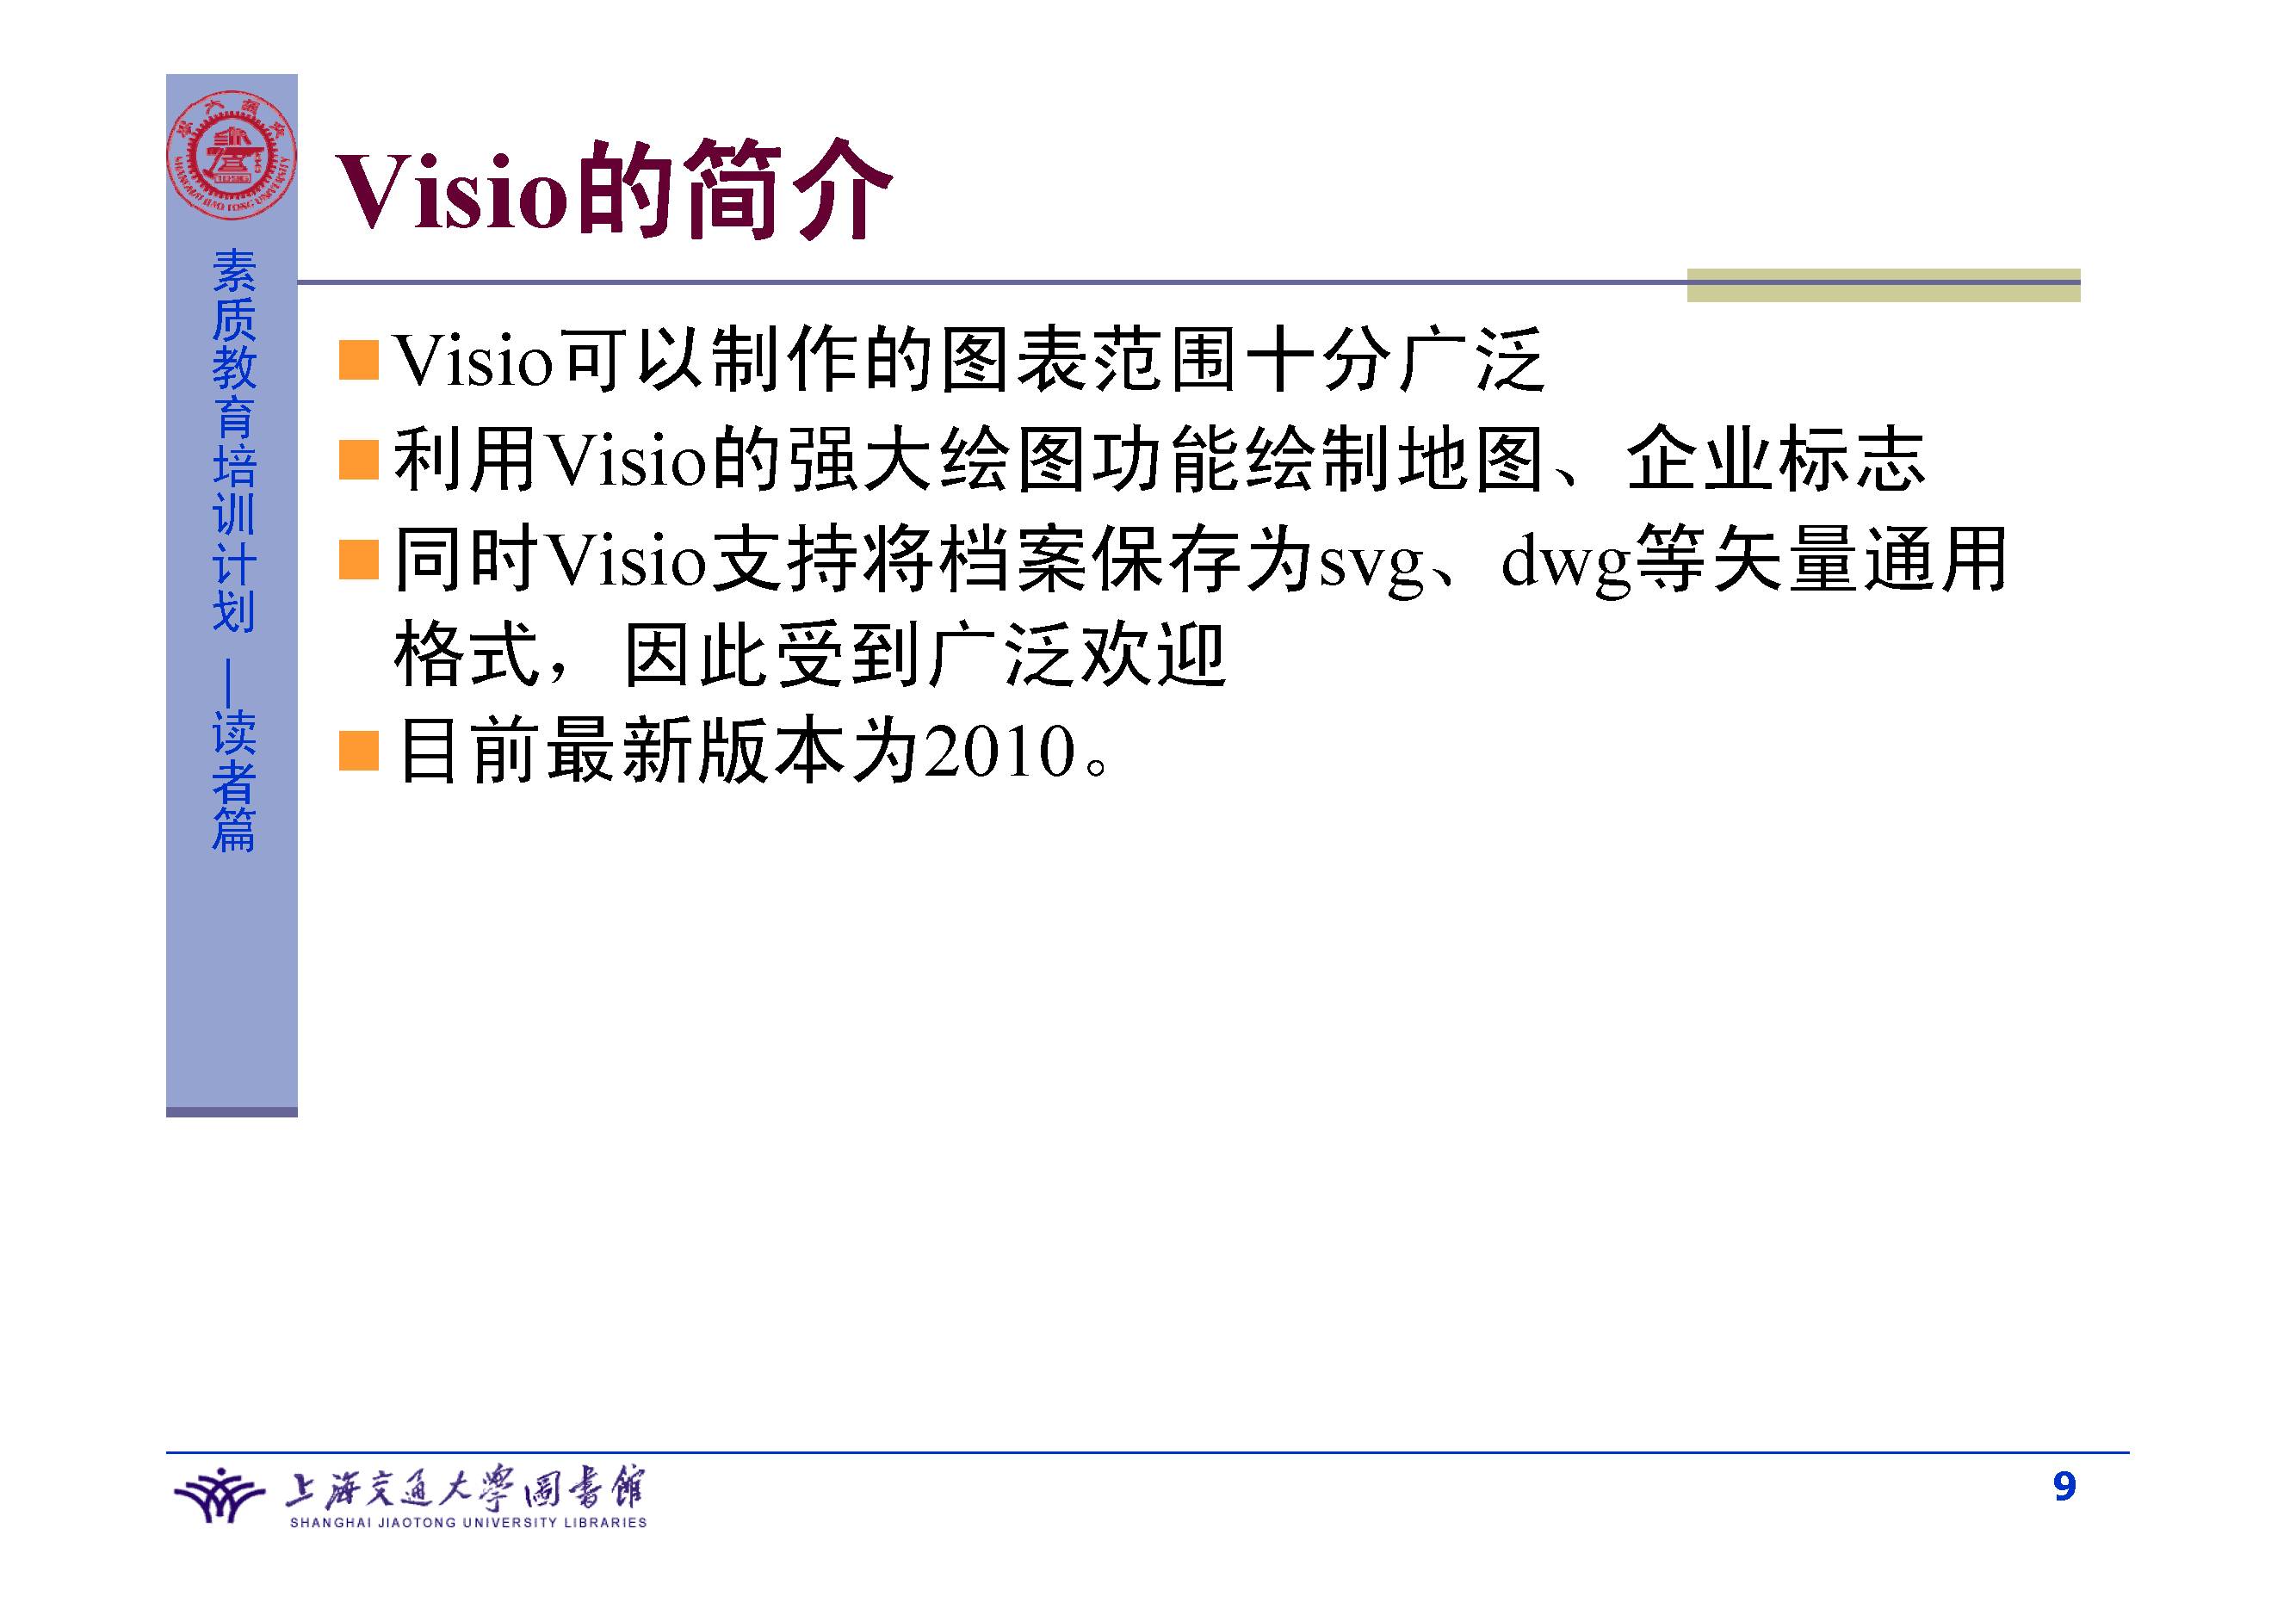 Microsoft Visio 使用方法和技巧